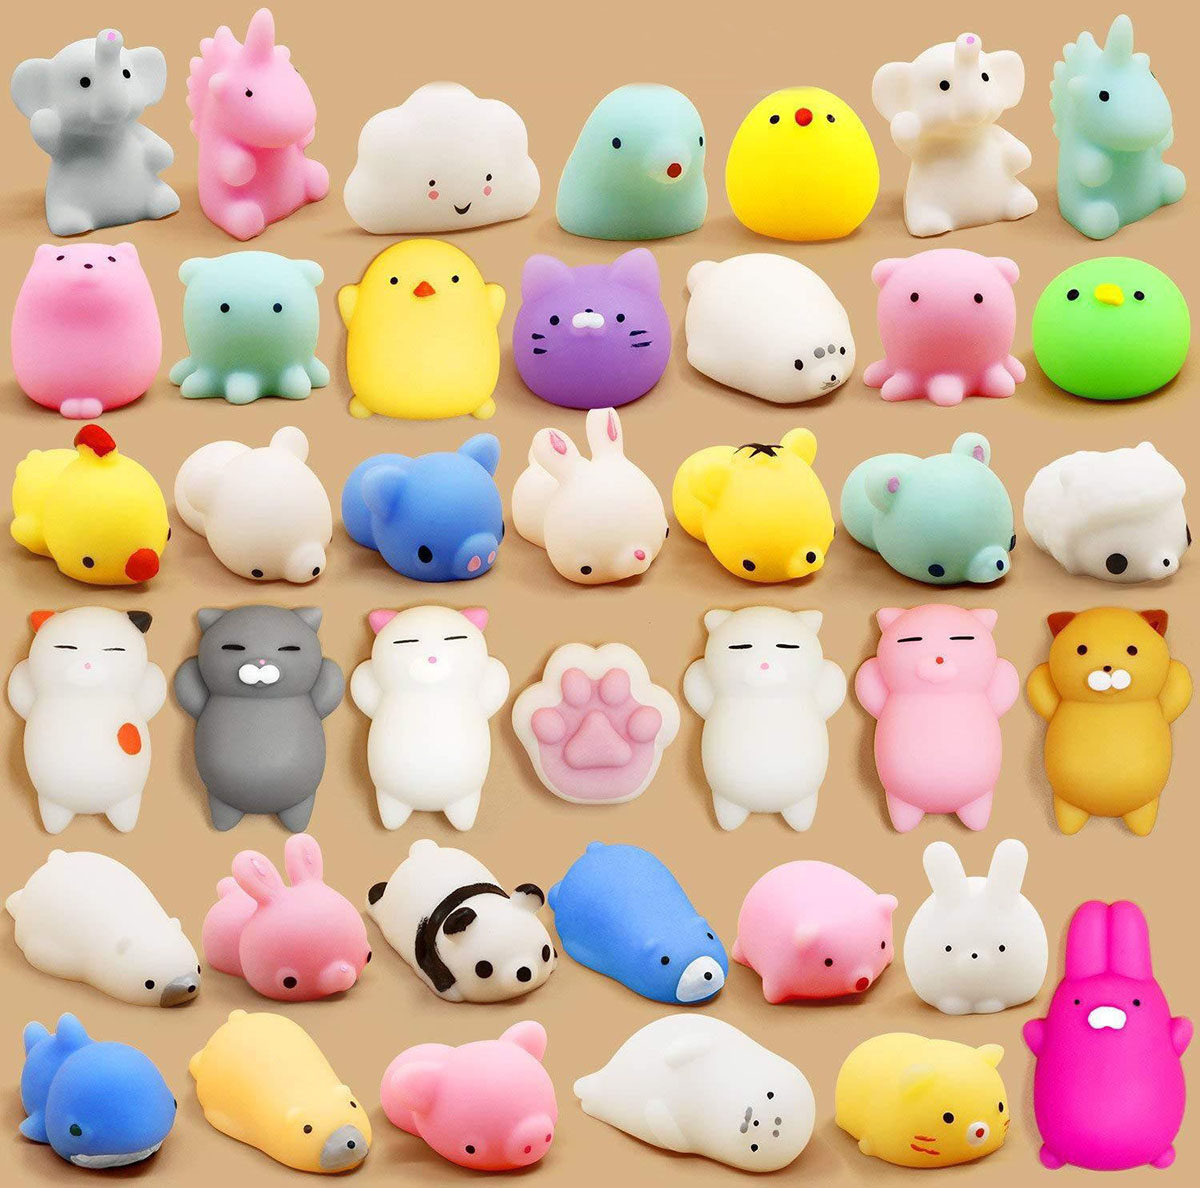 Kawaii Squishies Mochi Squishy Toys TPR Mini Stressabbau Spielzeug Geburtstagsgeschenk Dekompressionsspielzeug